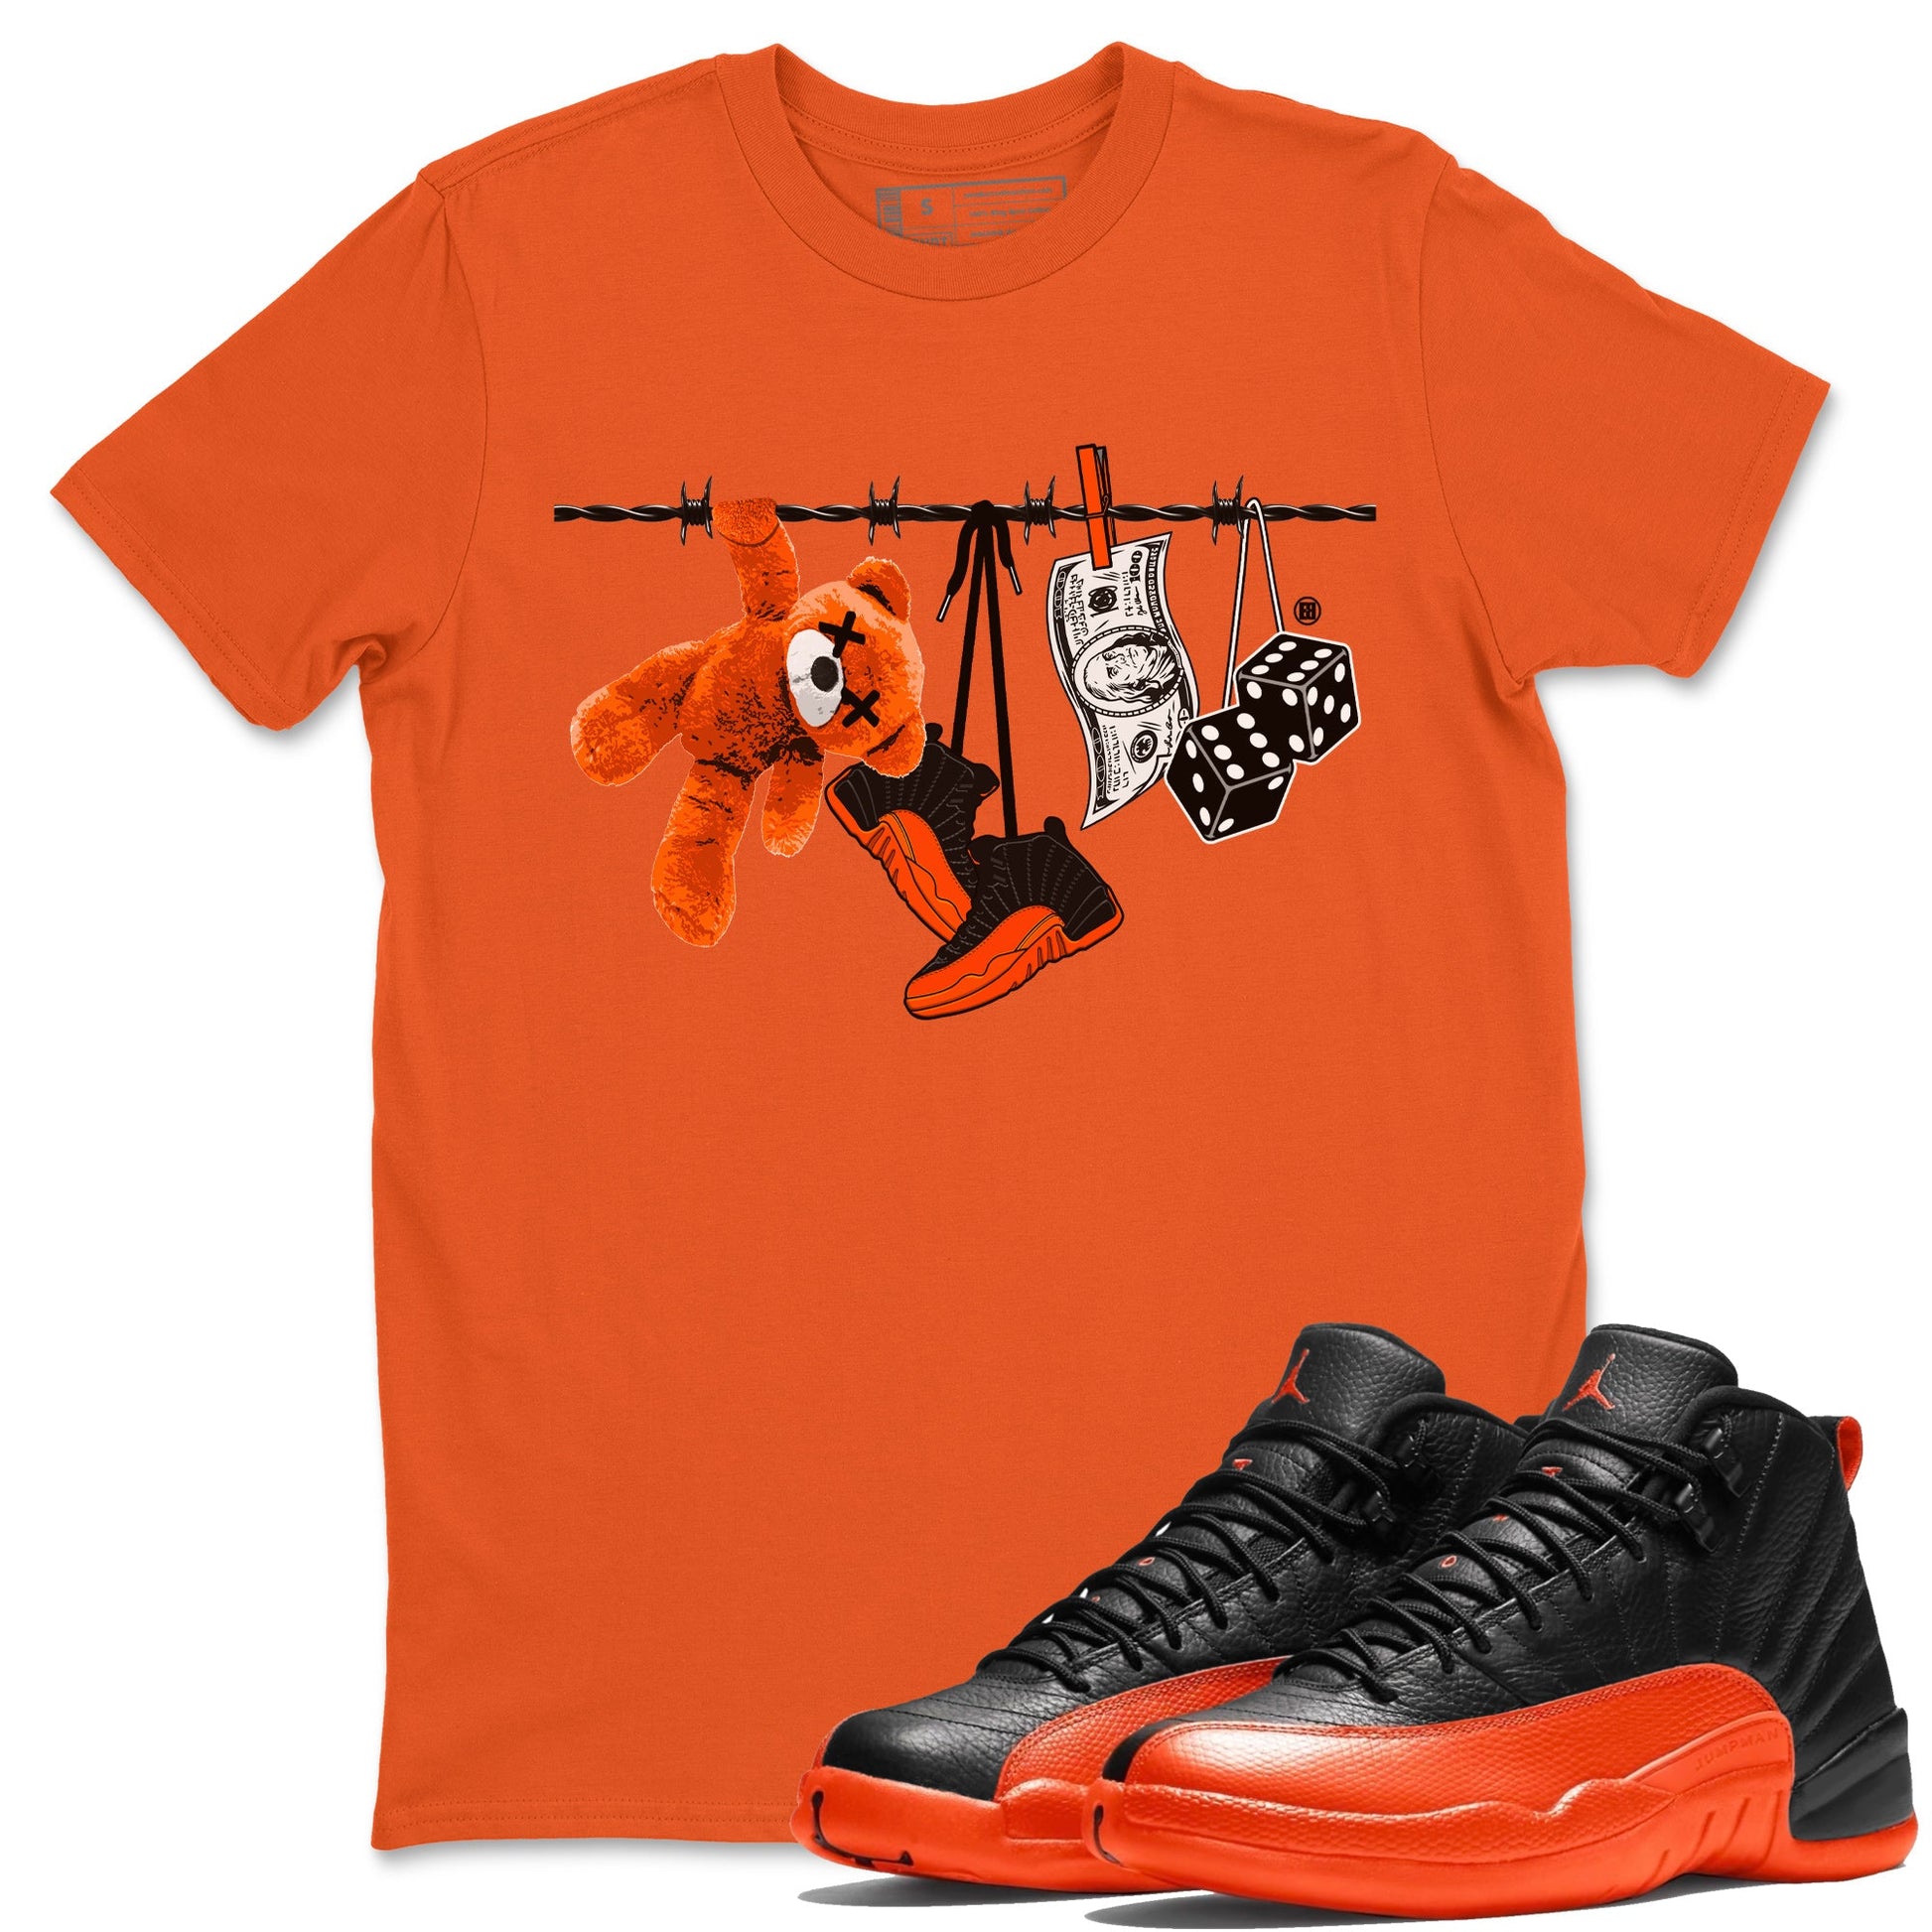 Air Jordan 12 Brilliant Orange Sneaker Match Tees Clothesline Sneaker Tees 12s Brilliant Orange Tee Unisex Shirts Orange 1